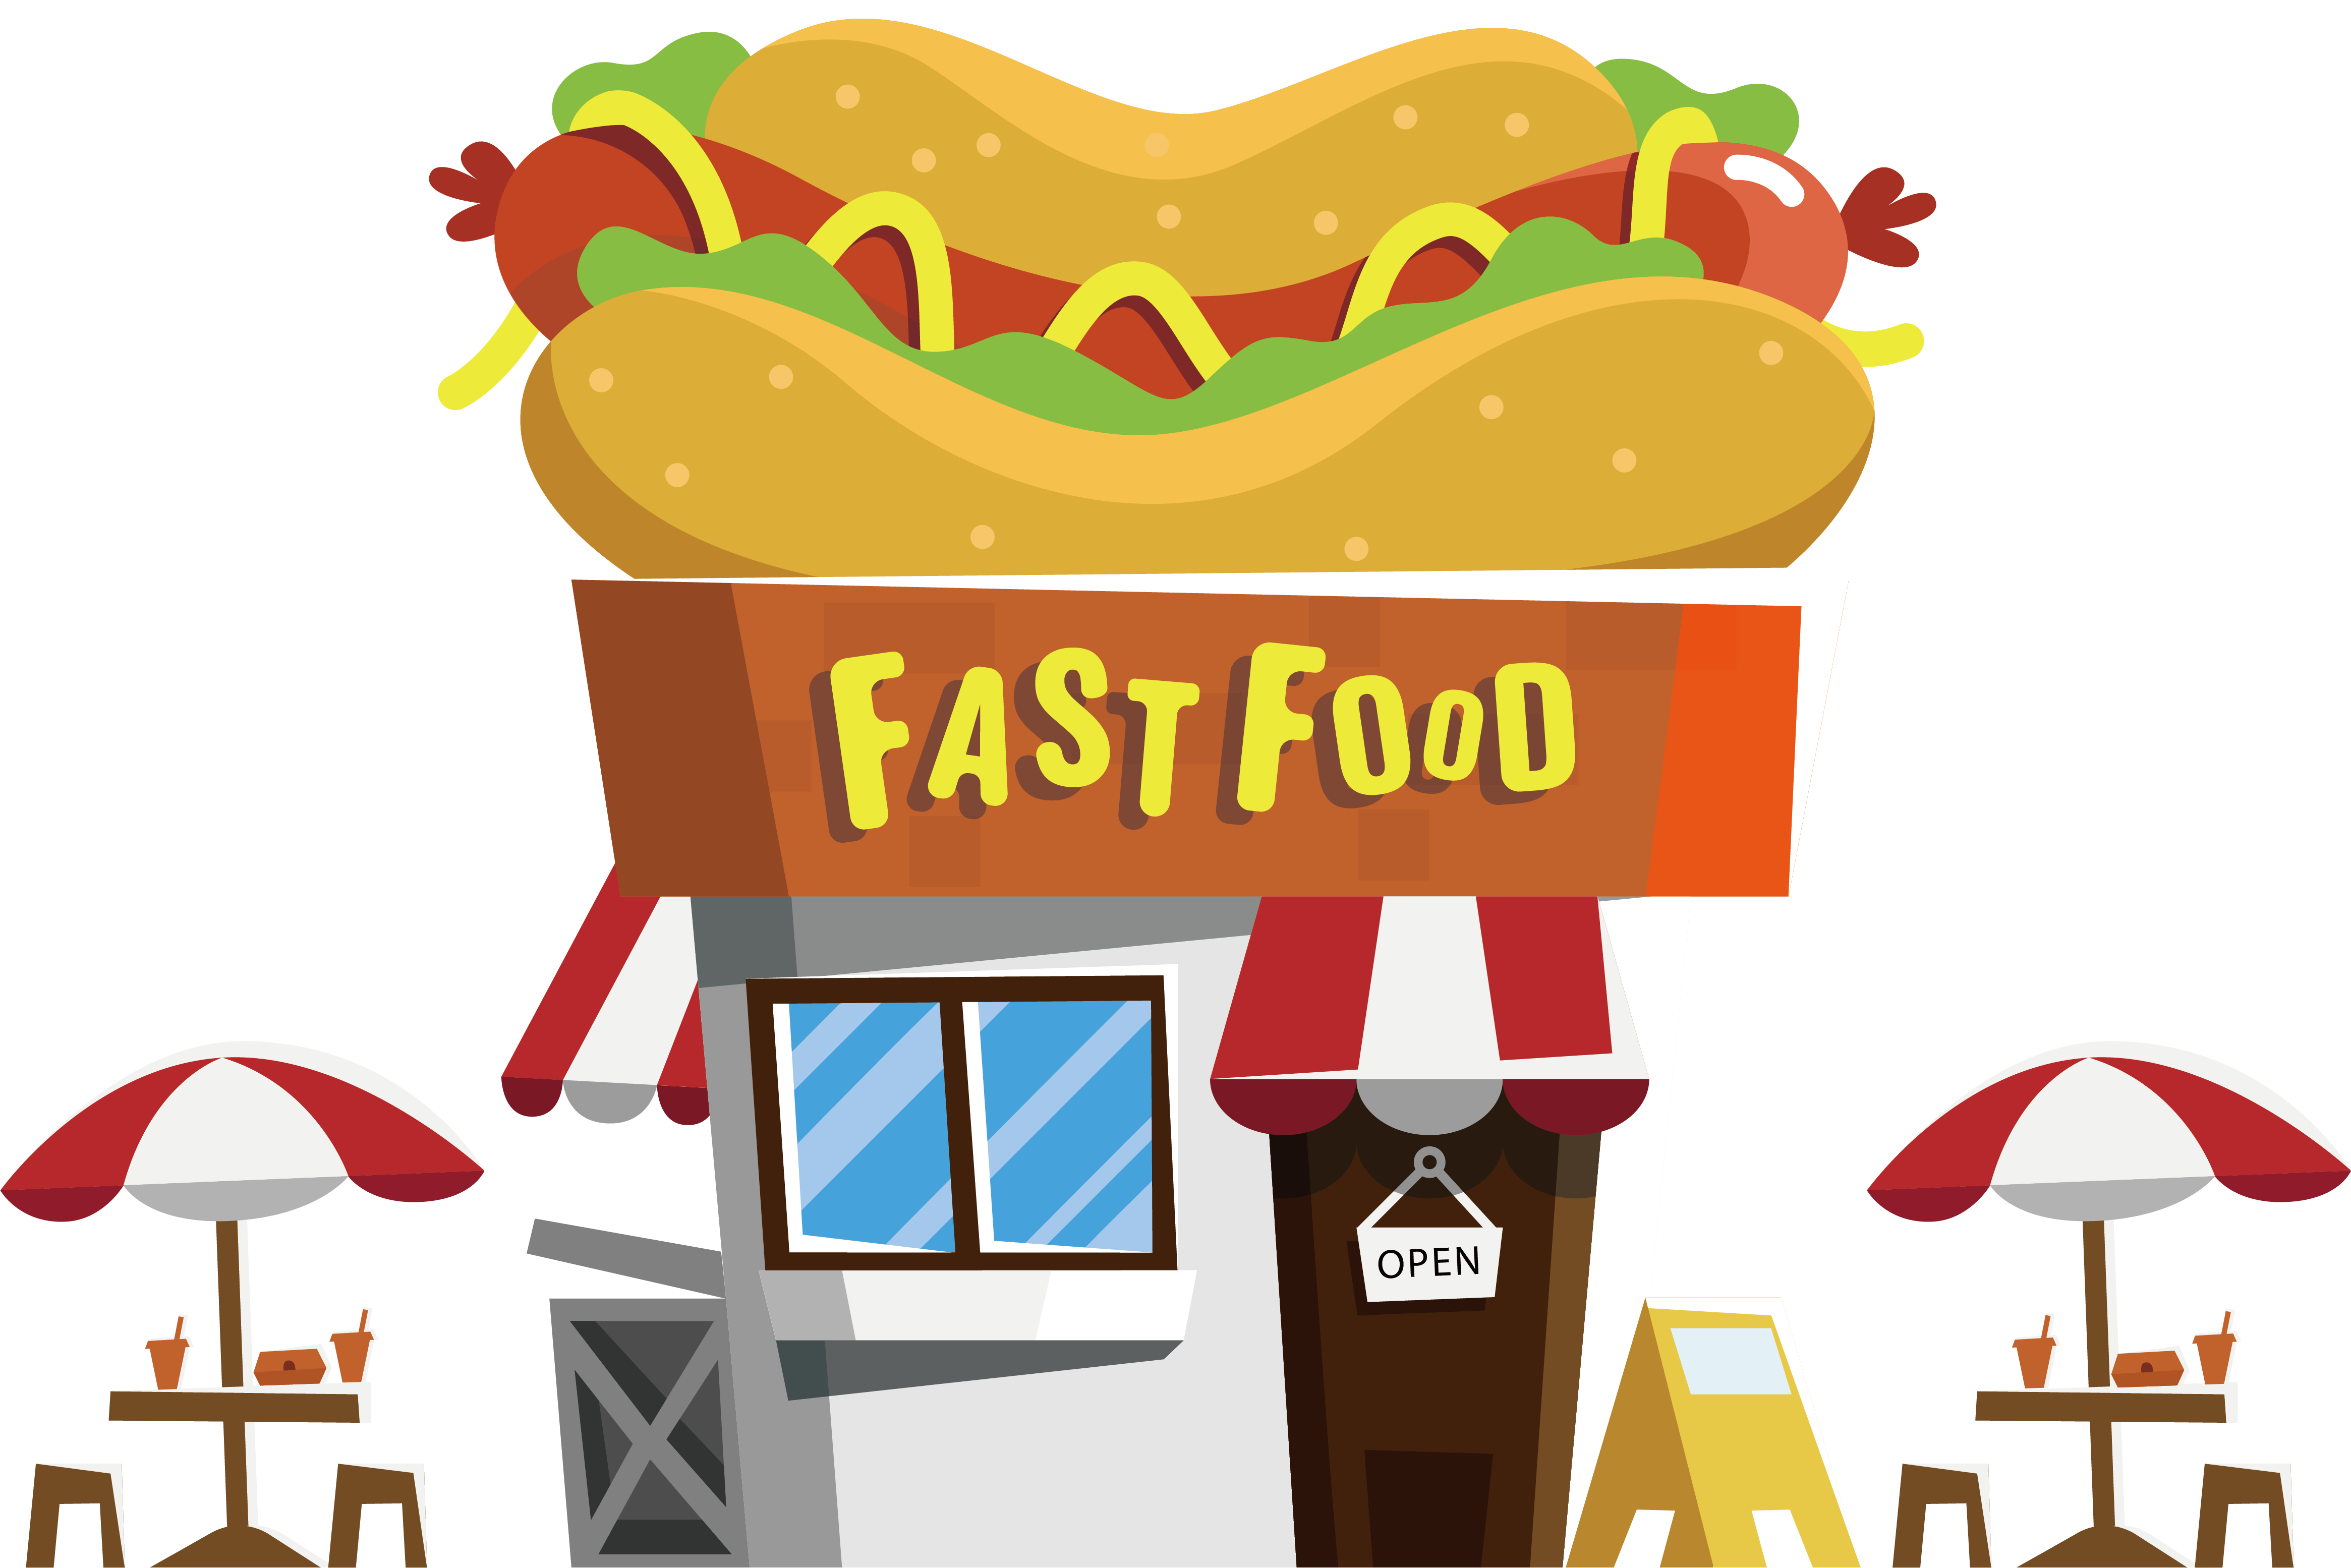 Fast food restaurant.